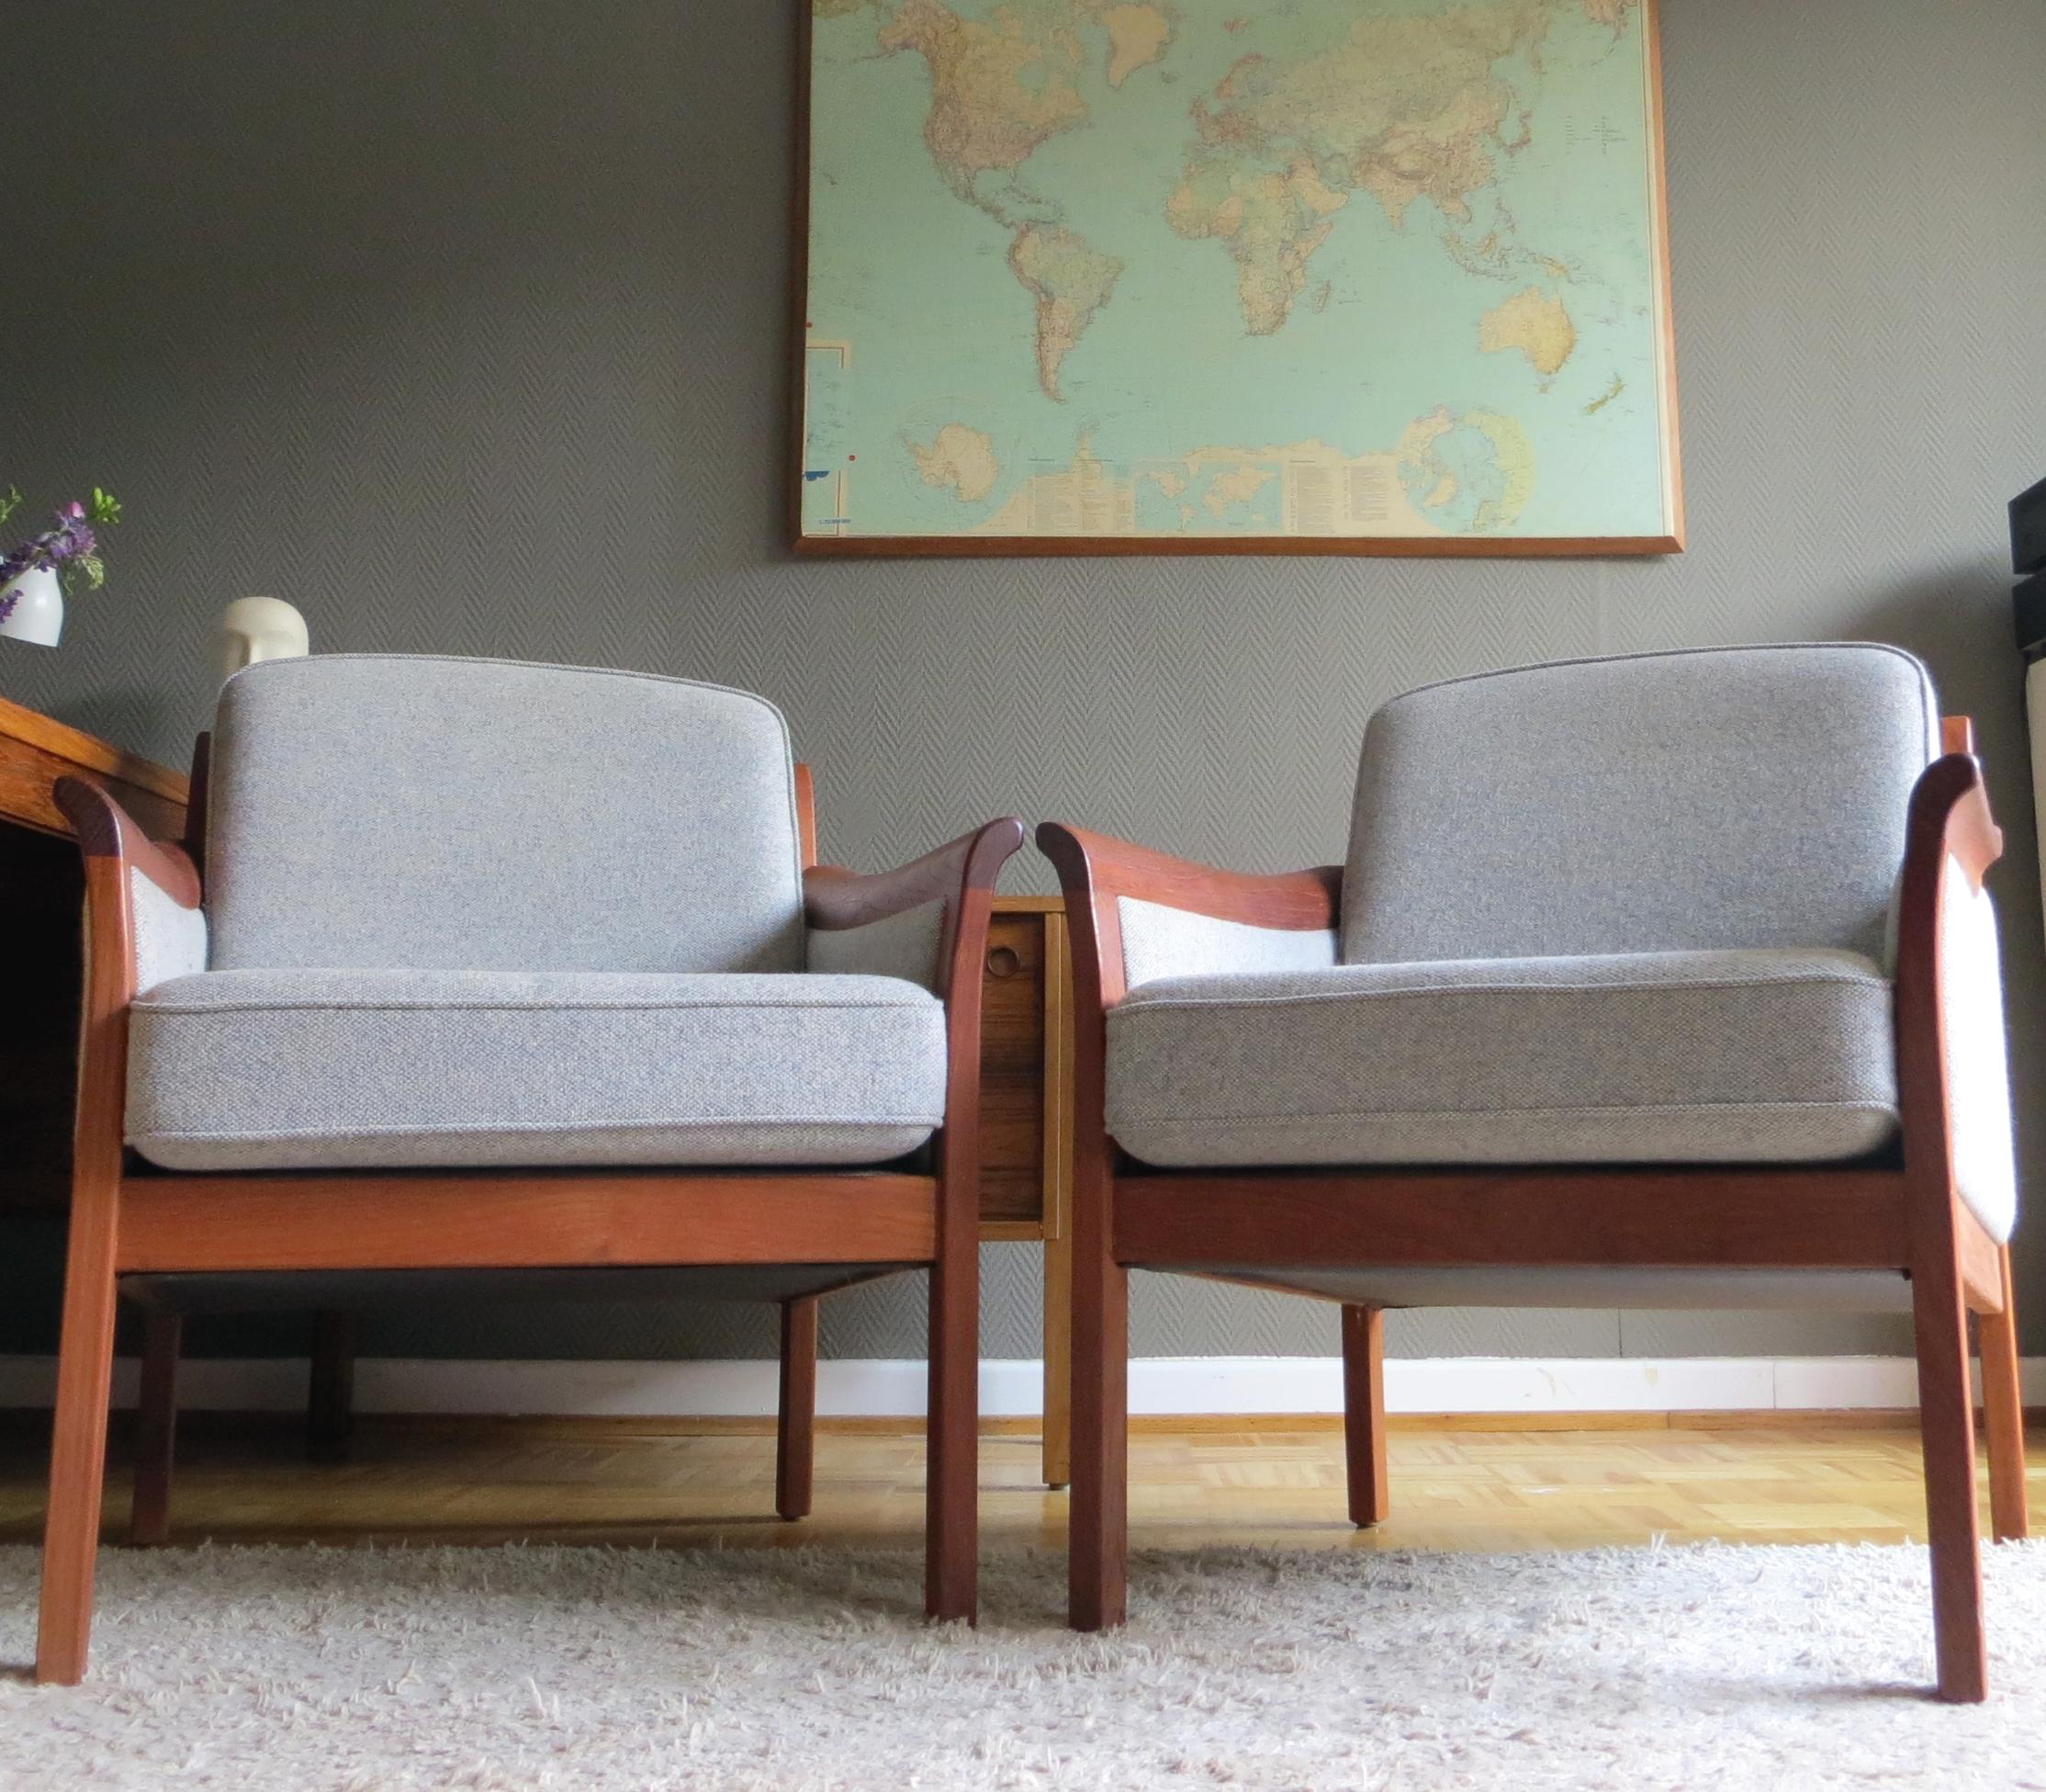 20th Century Danish Mid-Century Modern Solid Teak & Wool Easy Chairs Set in Grey-Beige, 1960s For Sale